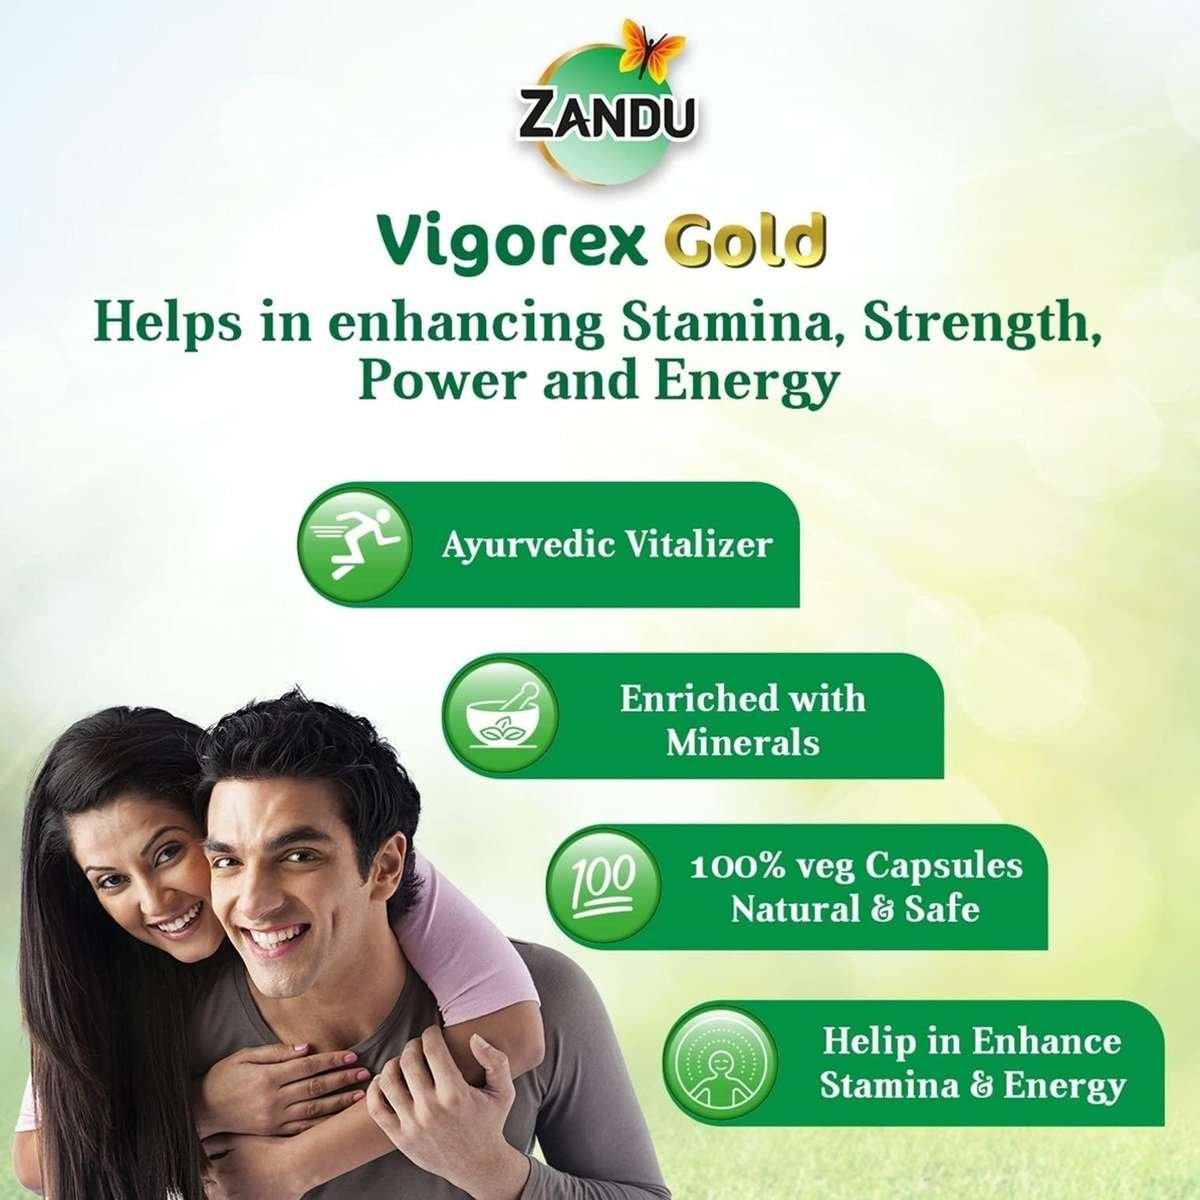 Zandu Vigorex Gold Benefits